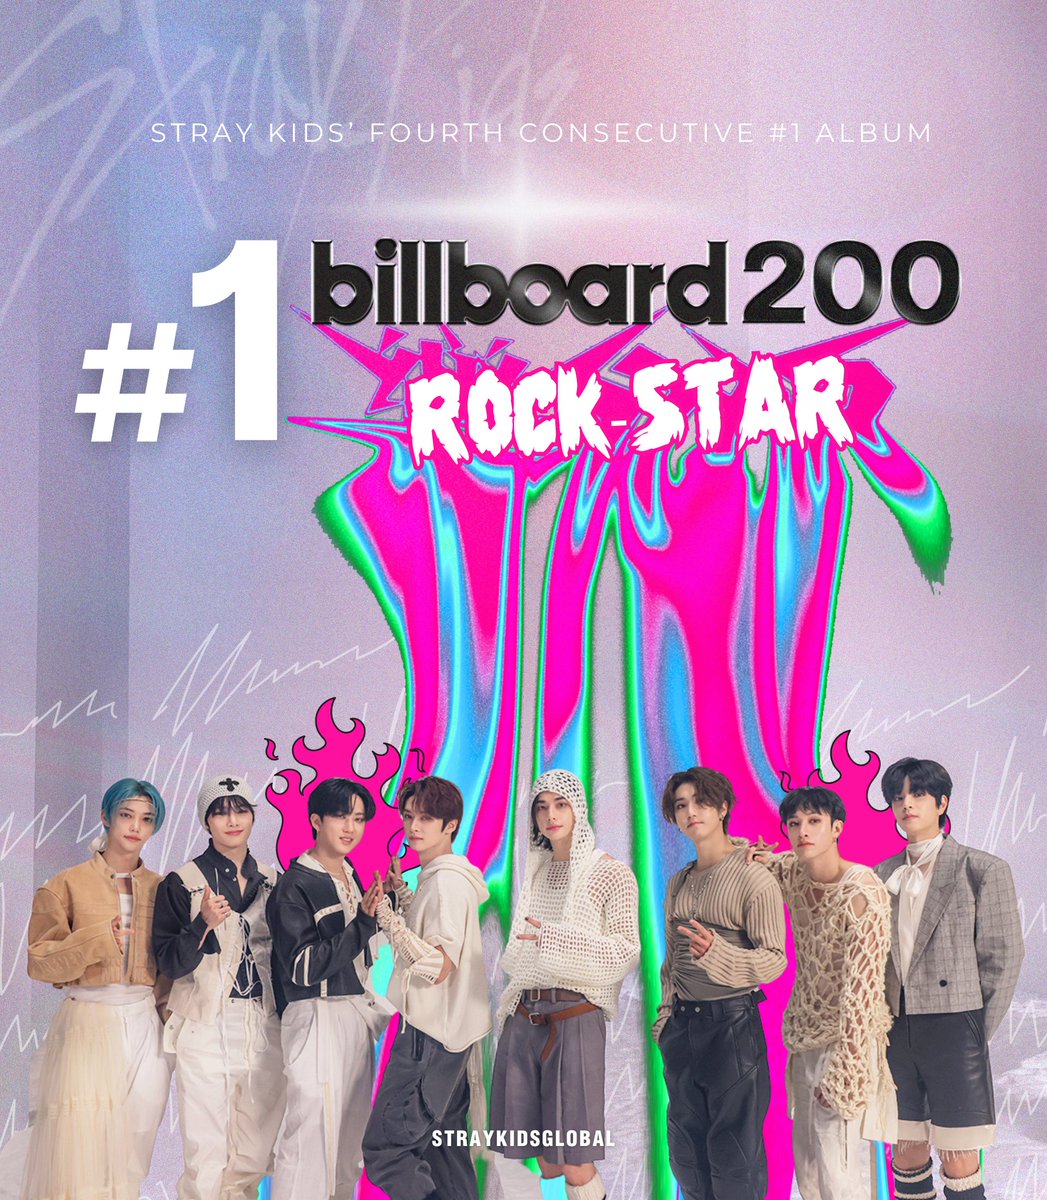 Stray Kids' “ROCK-STAR” Spends 4th Week In Top 35 Of Billboard 200